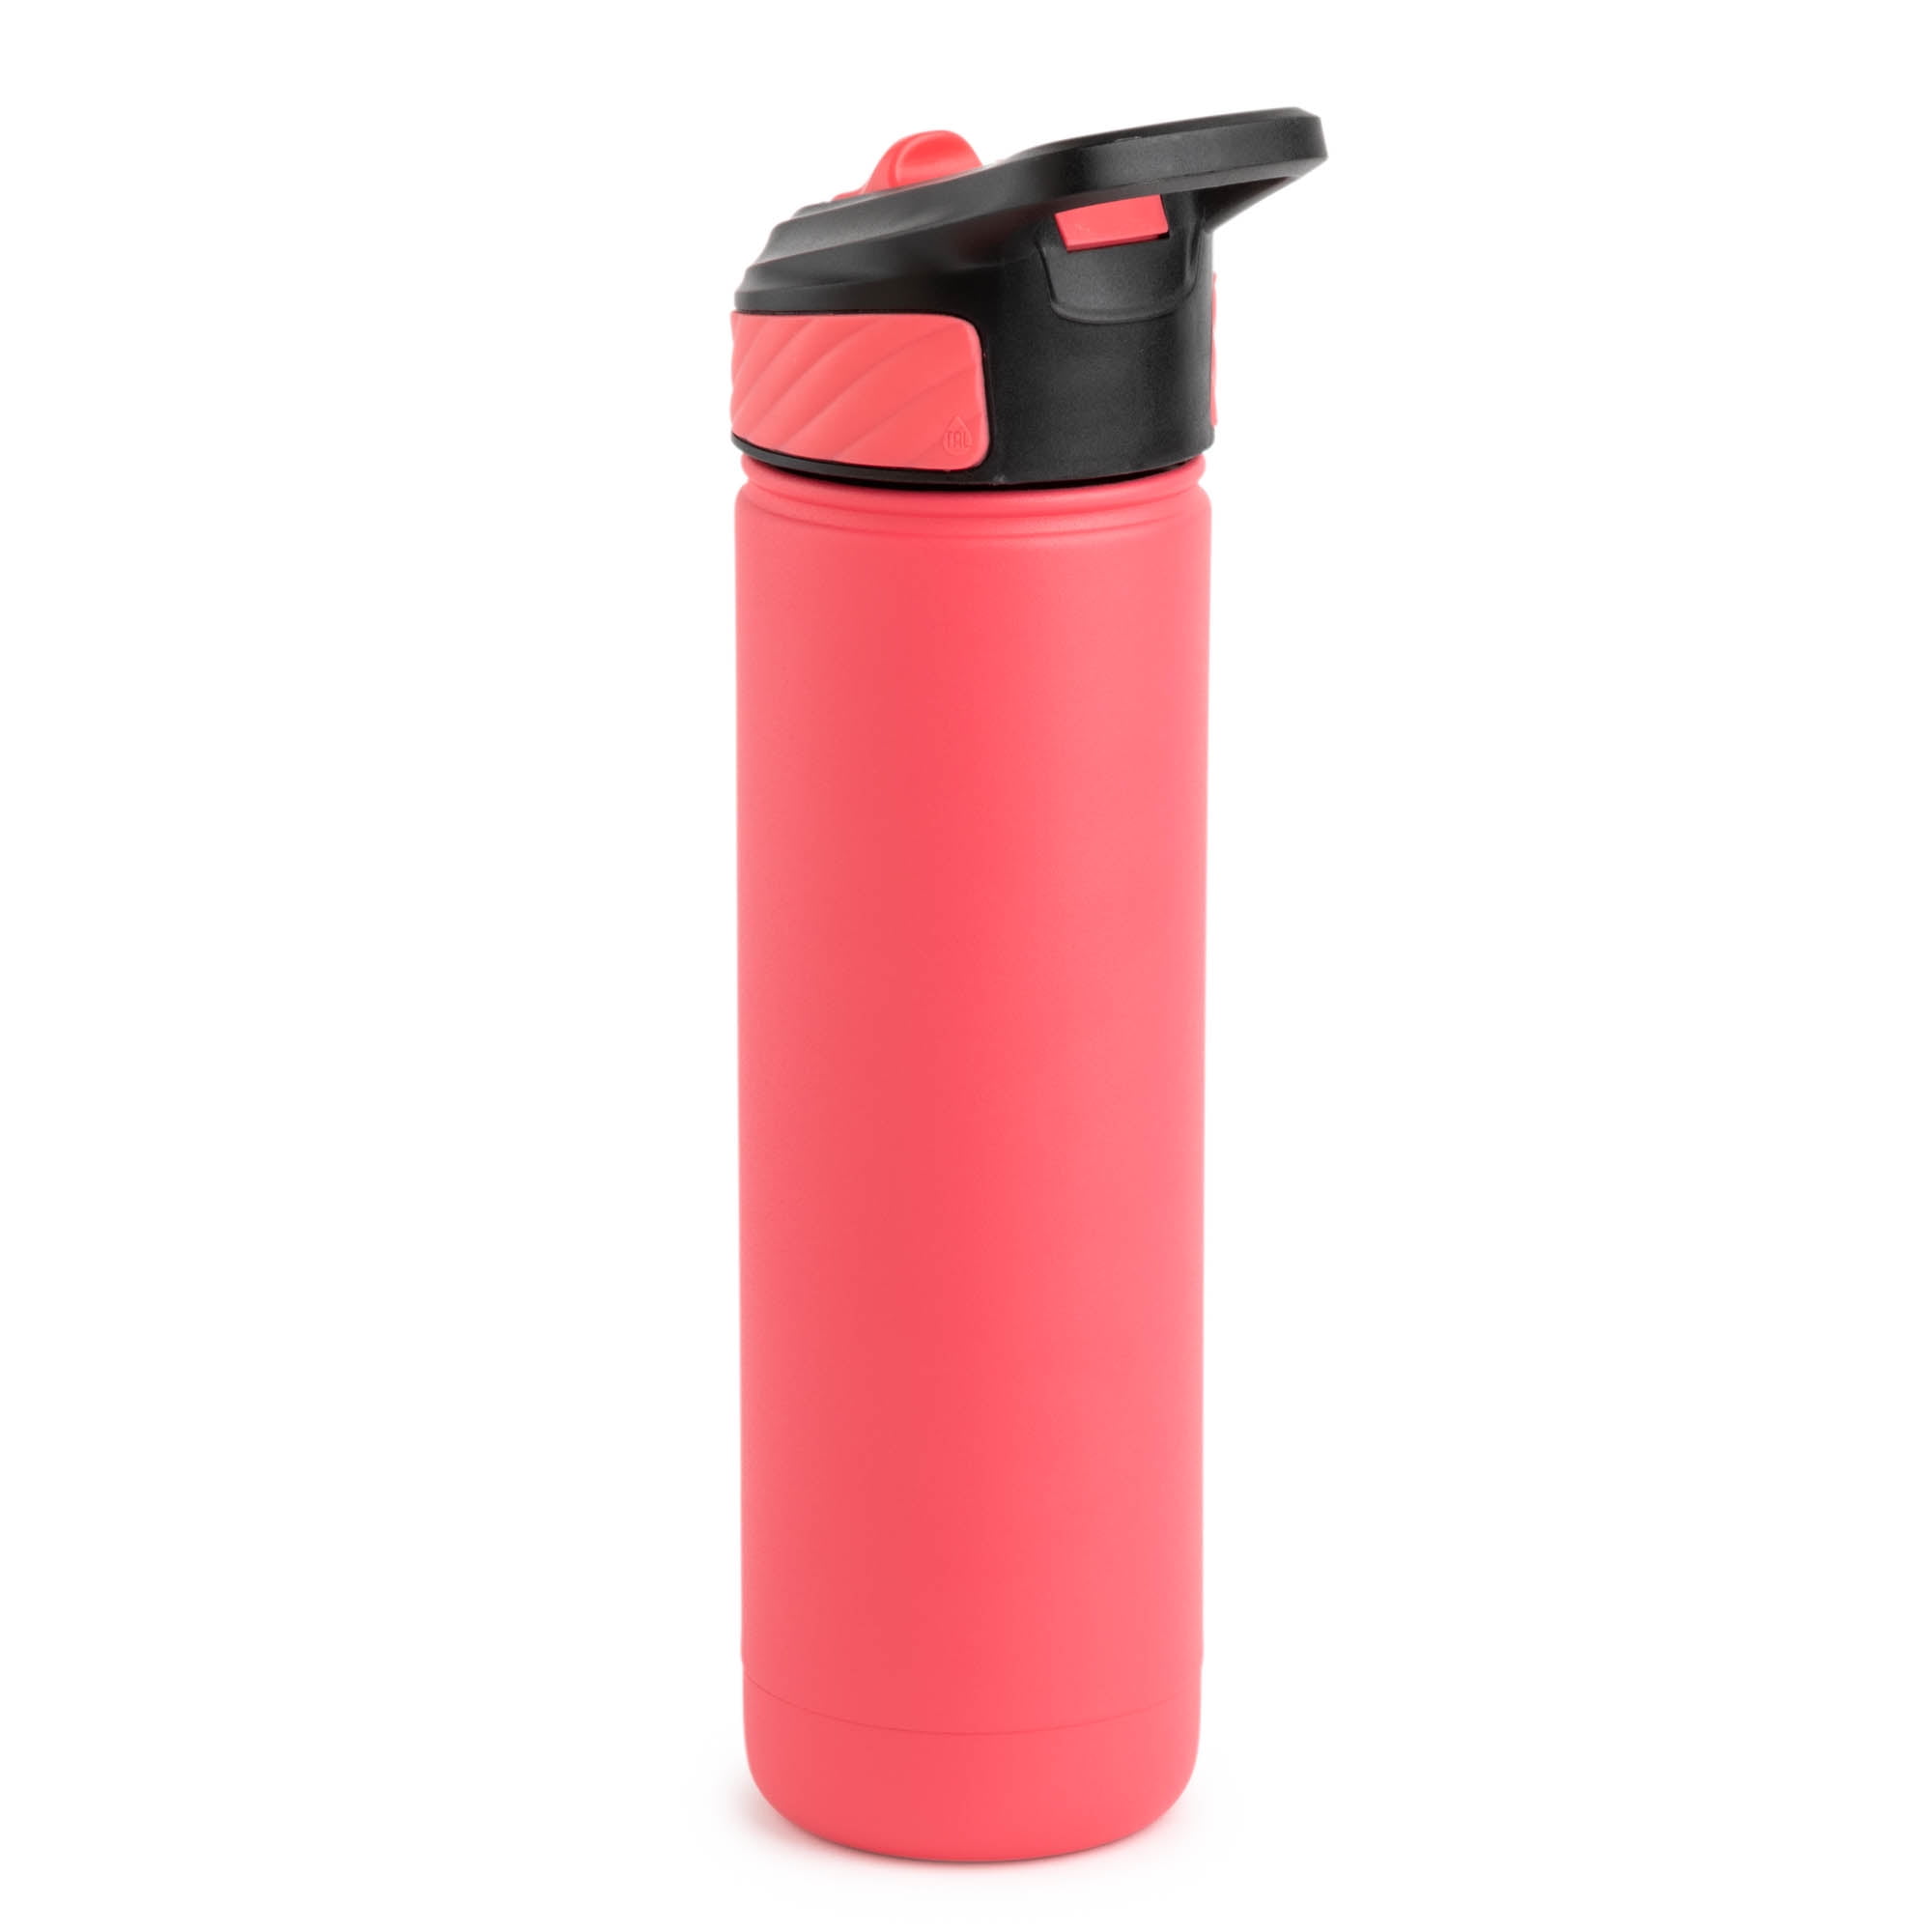 TAL Stainless Steel Ranger Water Bottle 26 fl oz, Pink